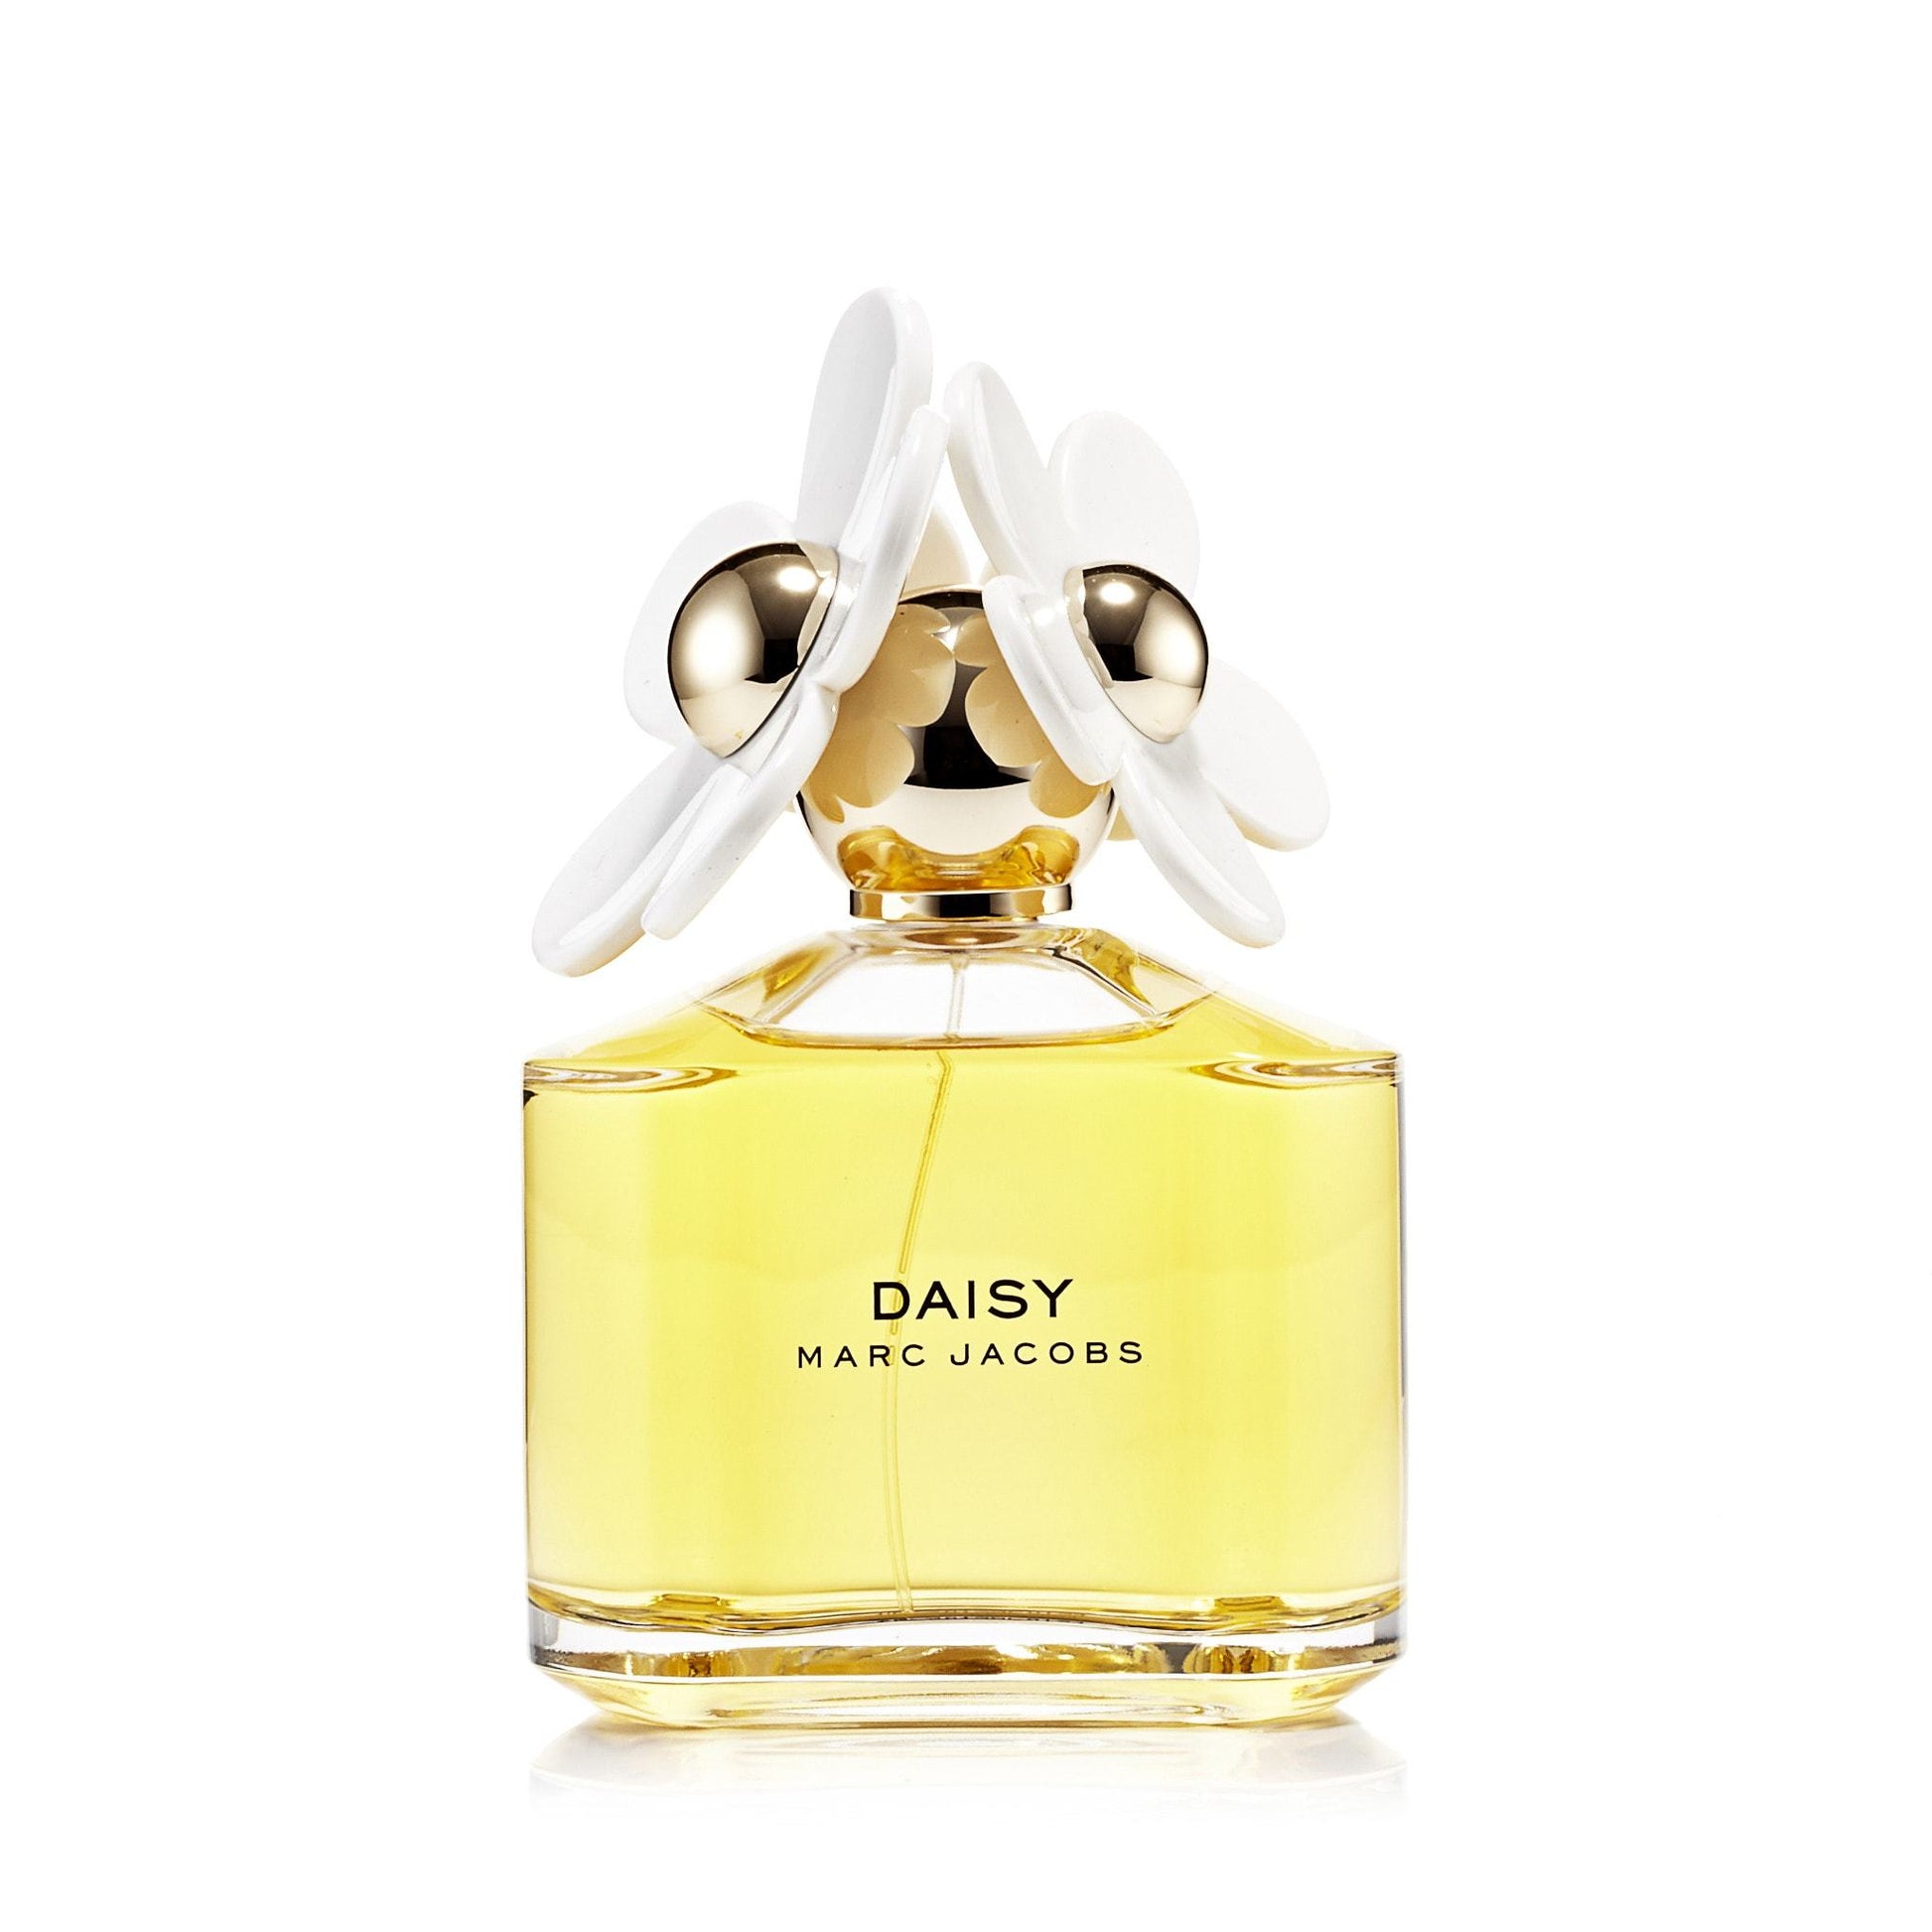 Daisy Eau de Toilette Spray for Women by Marc Jacobs, Product image 6